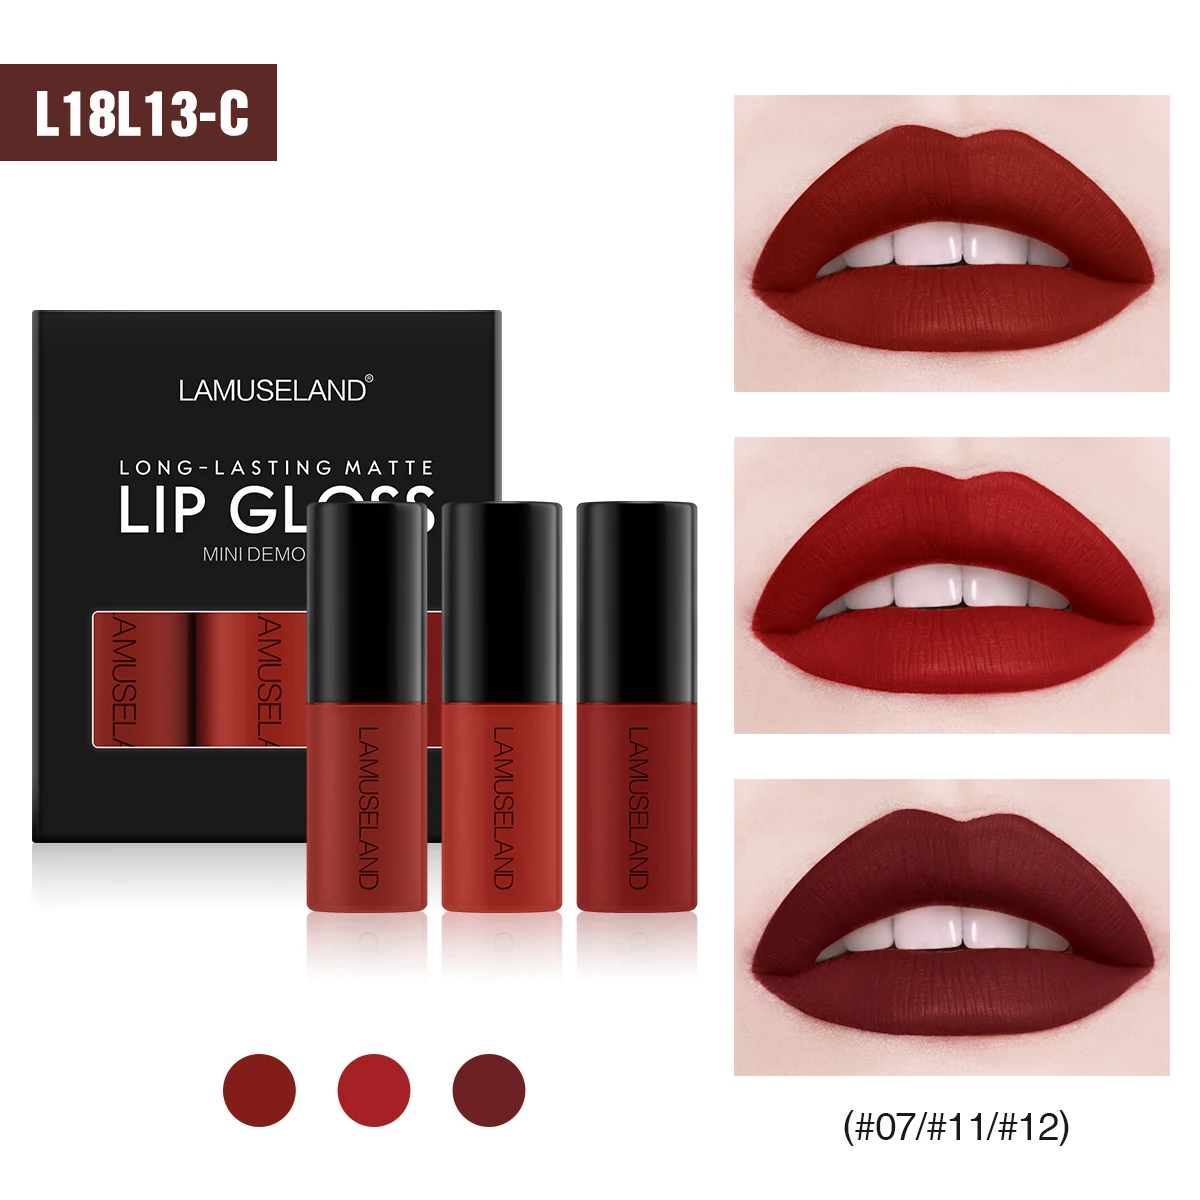 3Pcs/Lot Waterproof Long-Lasting Matte Mini Lipstick 12 Colors Lip Gloss 3.5g Lips Makeup Brand LAMUSELAND#L18L13 - Цвет: C